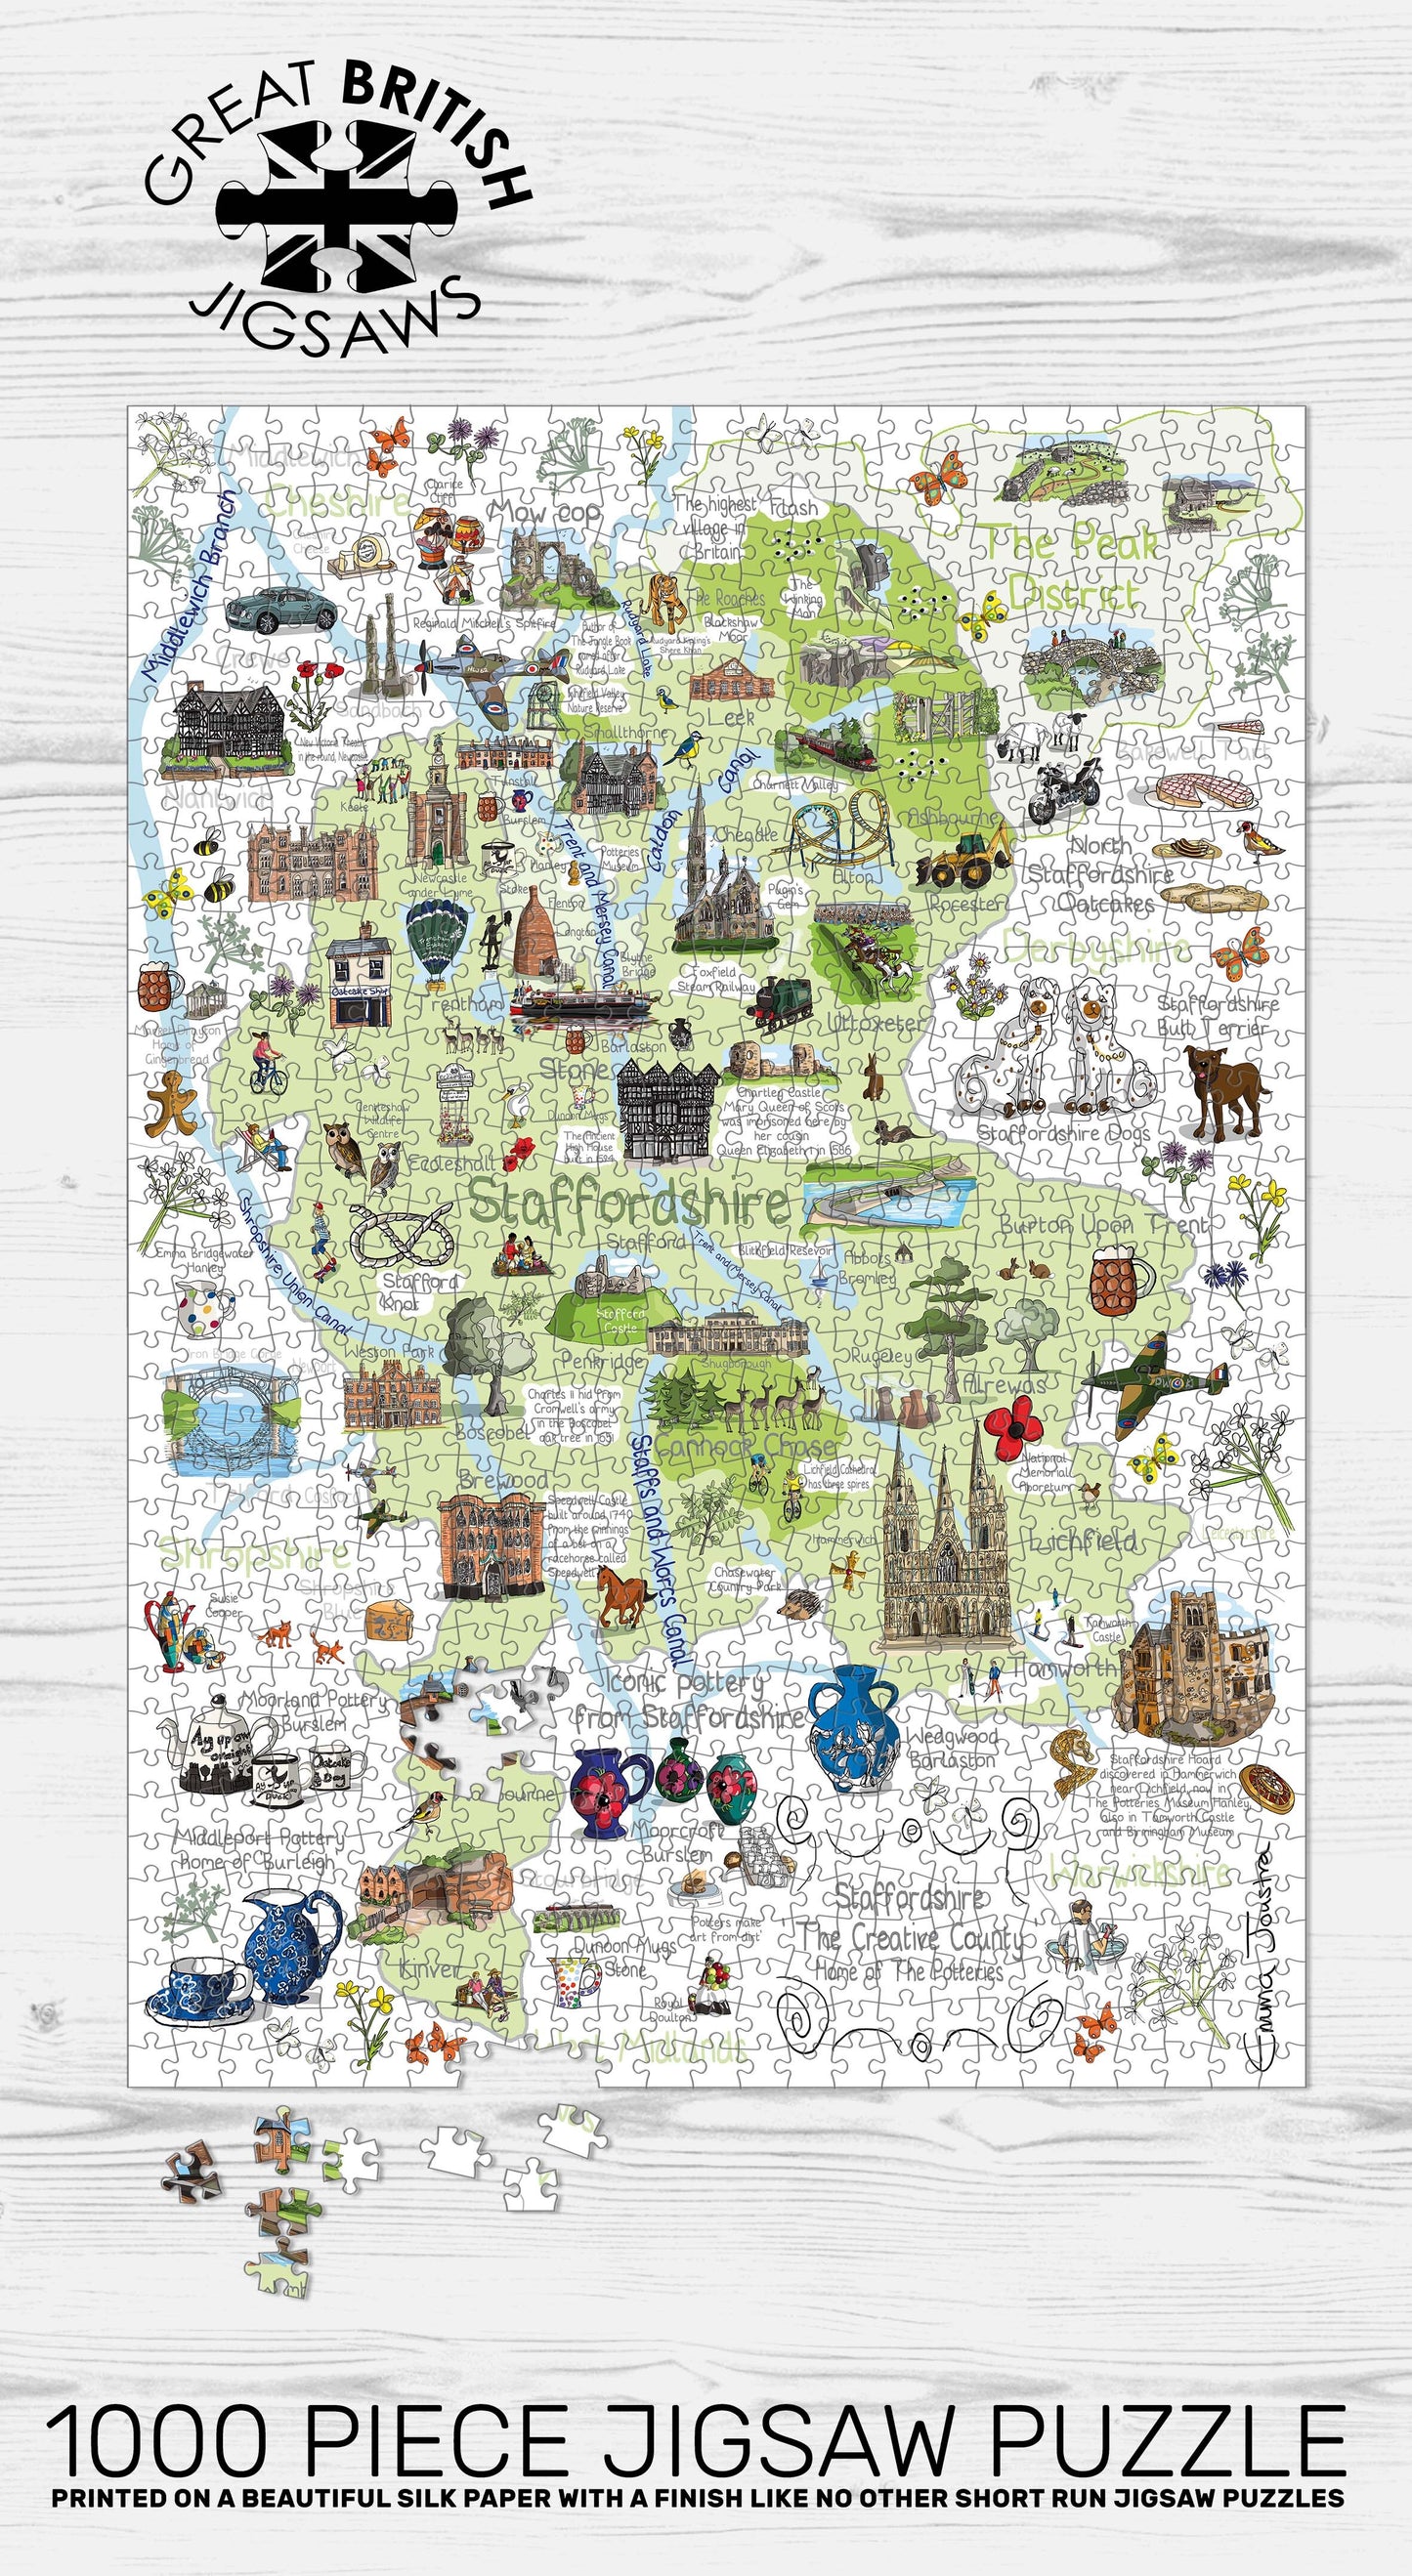 Staffordshire 'Map' 1,000 piece jigsaw puzzle